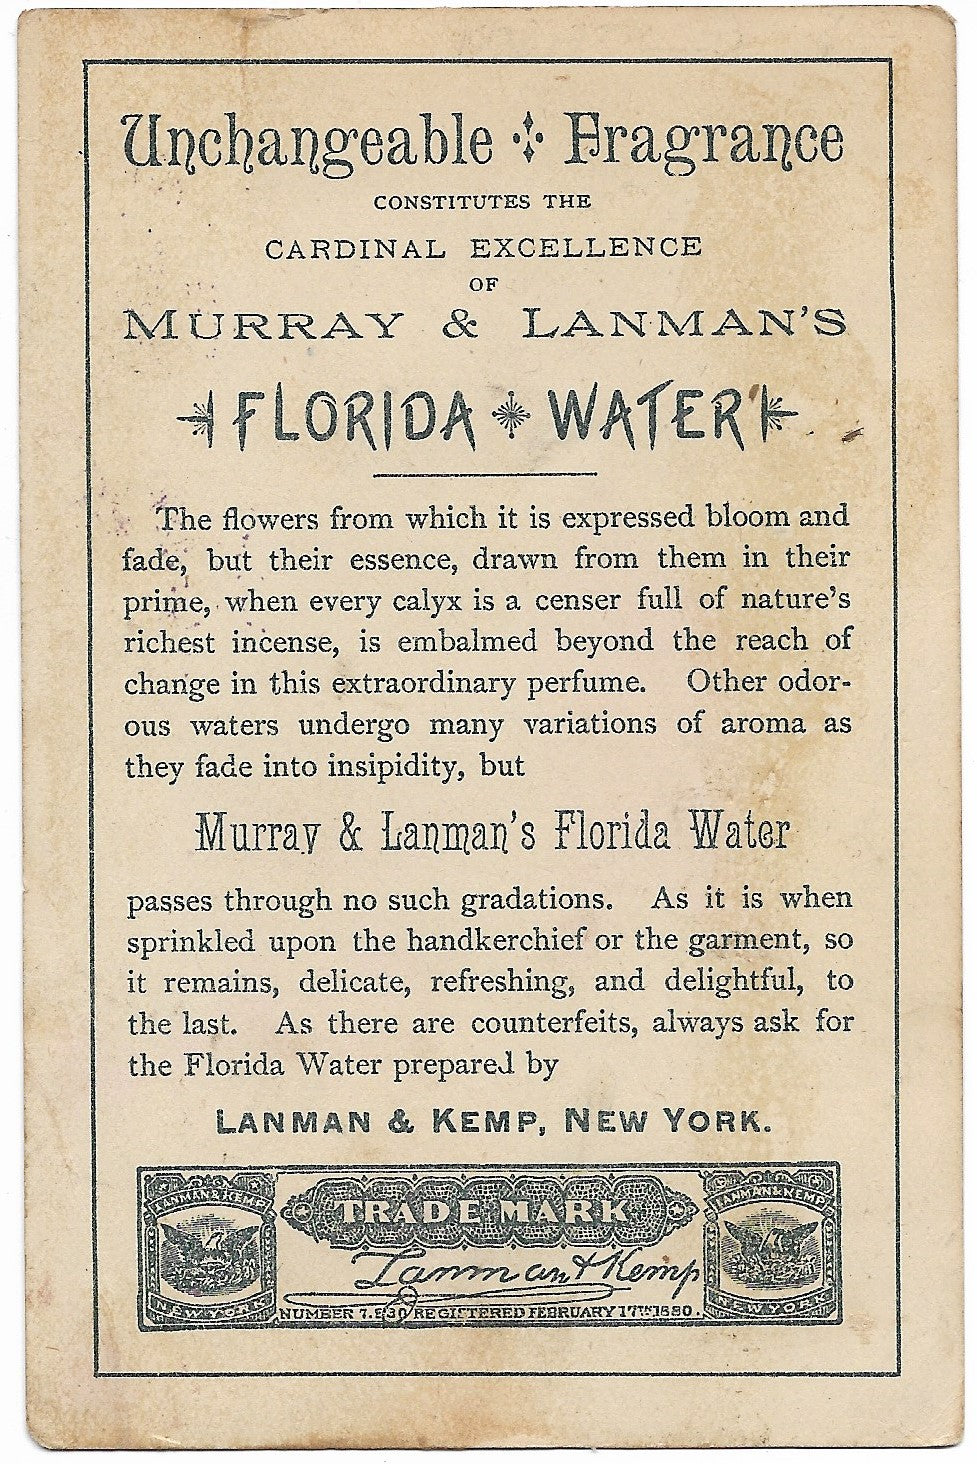 Murray & Lanman's Florida Water Antique Trade Card, New York - 3" x 4.75"